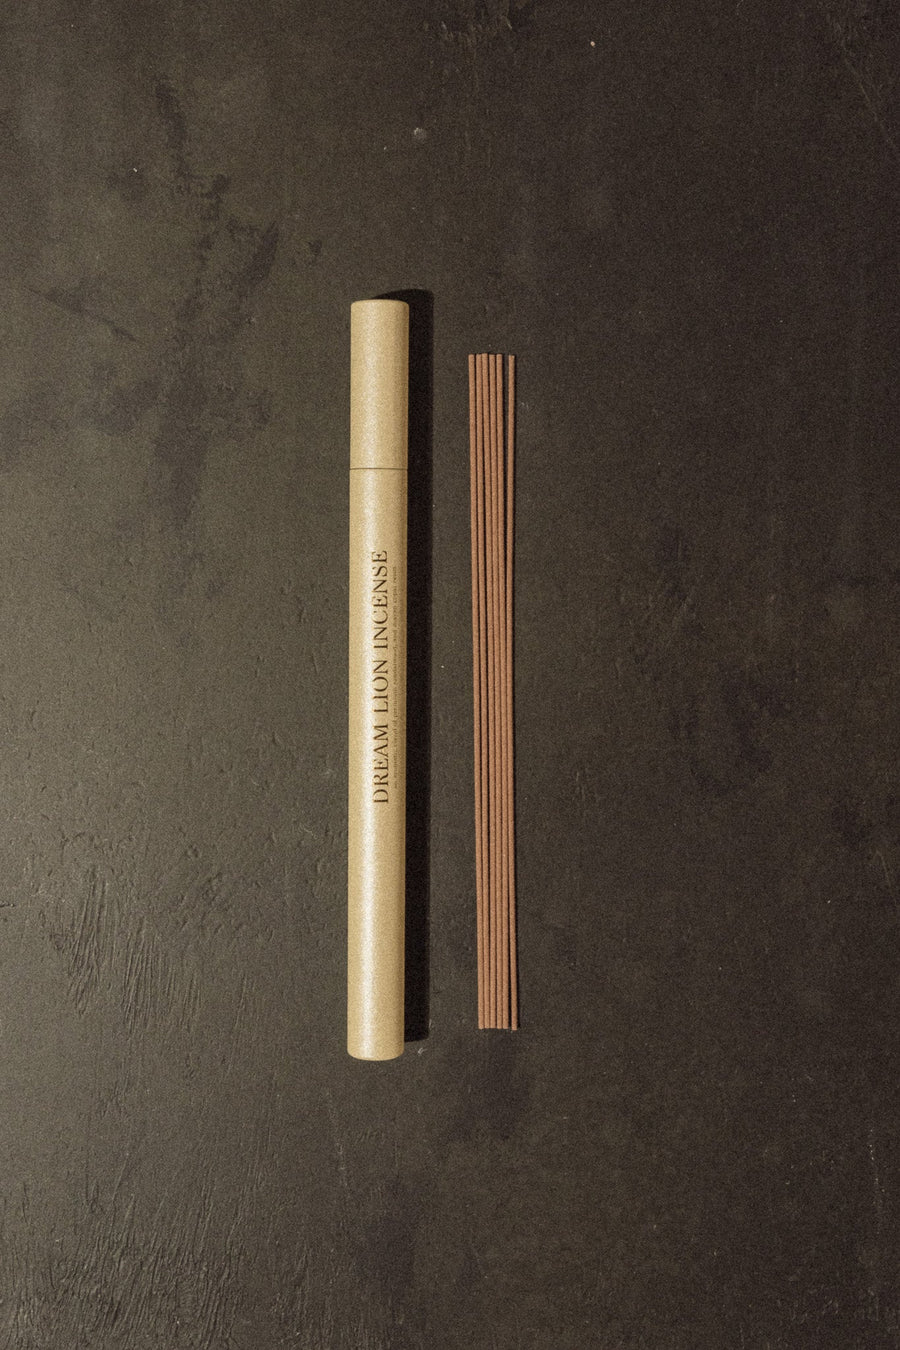 Dream Lion Incense - FAIRE Objects Gold / FINAL SALE Sandalwood and Copal Incense Sticks